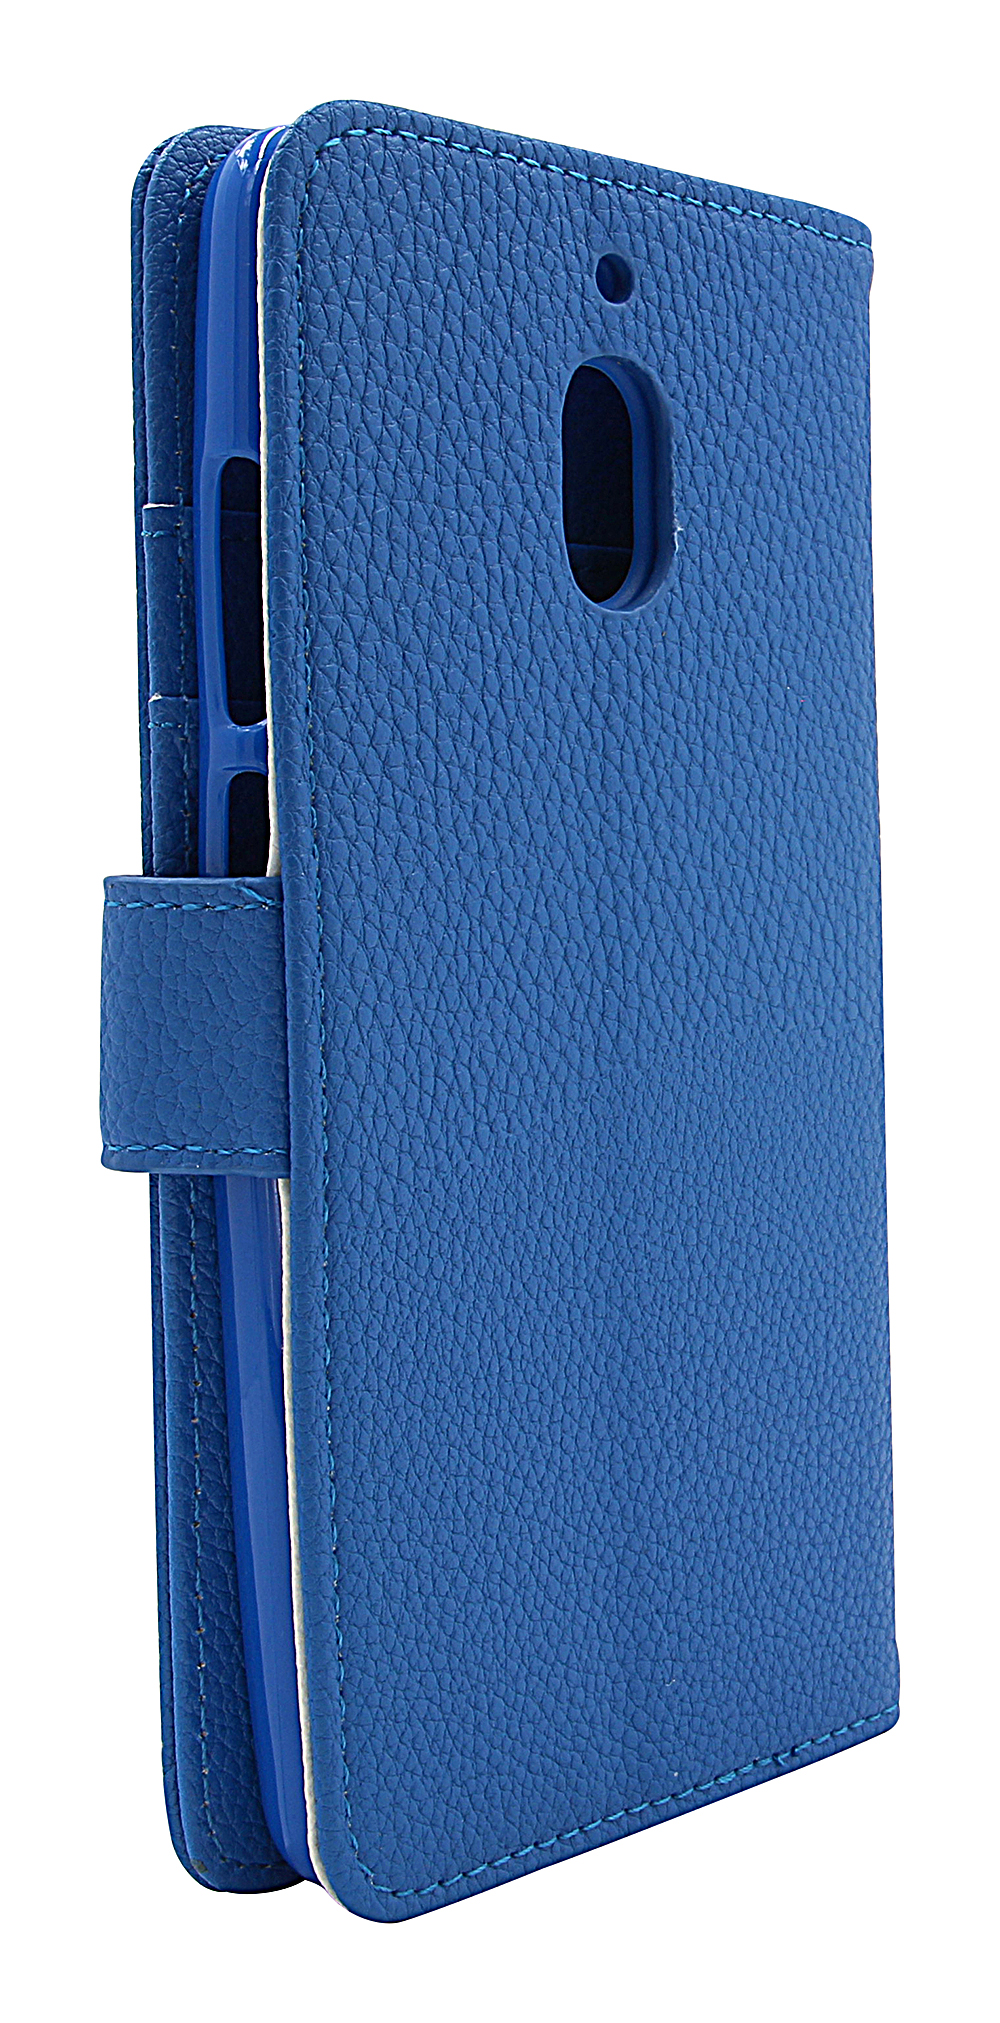 New Standcase Wallet Nokia 2.1